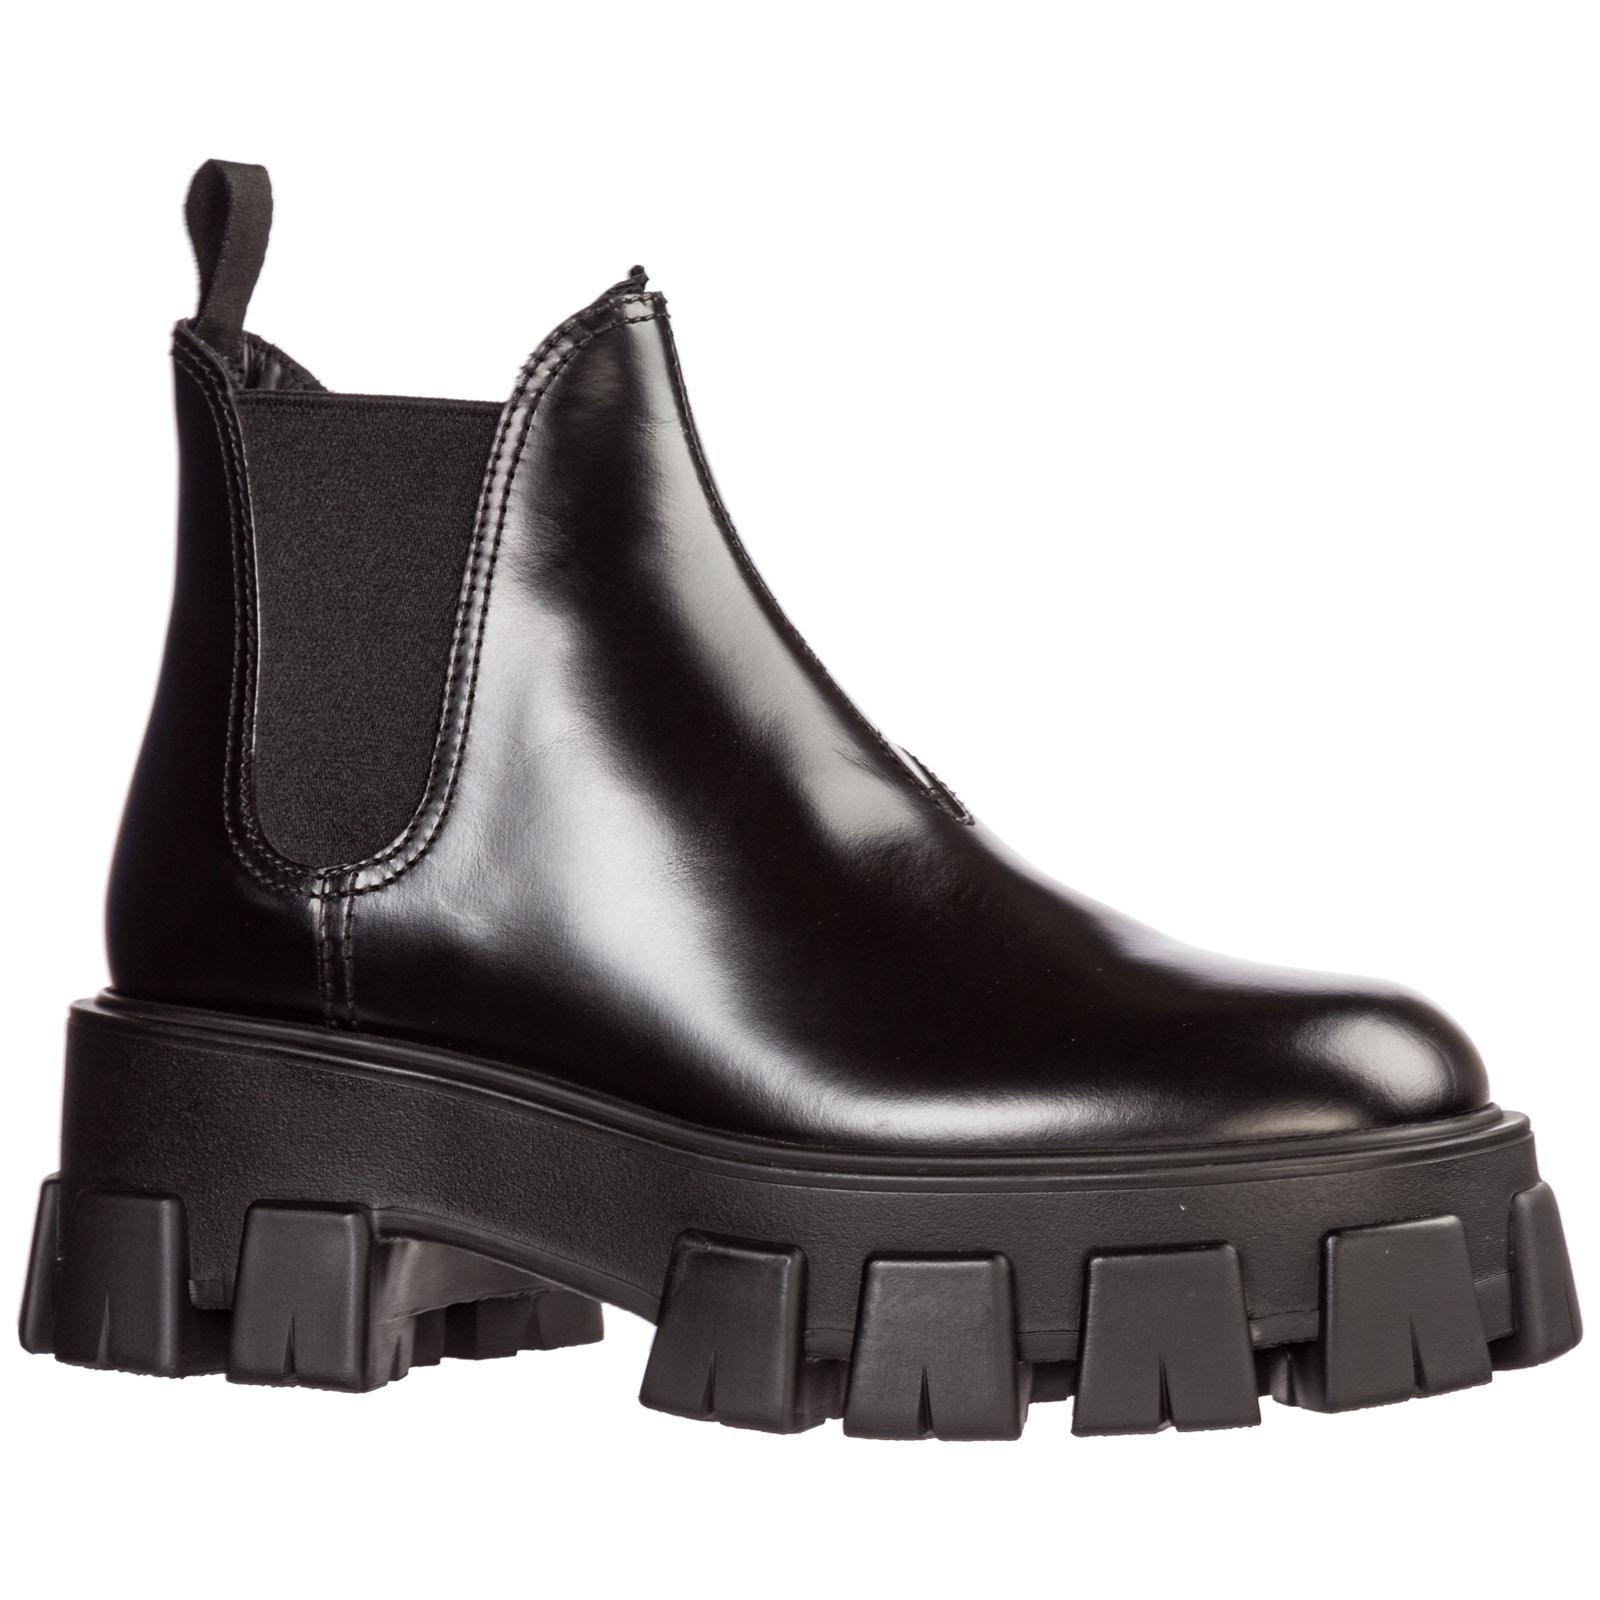 Prada Women's Leather Heel Ankle Boots Booties Monolith in Nero (Black) -  Lyst